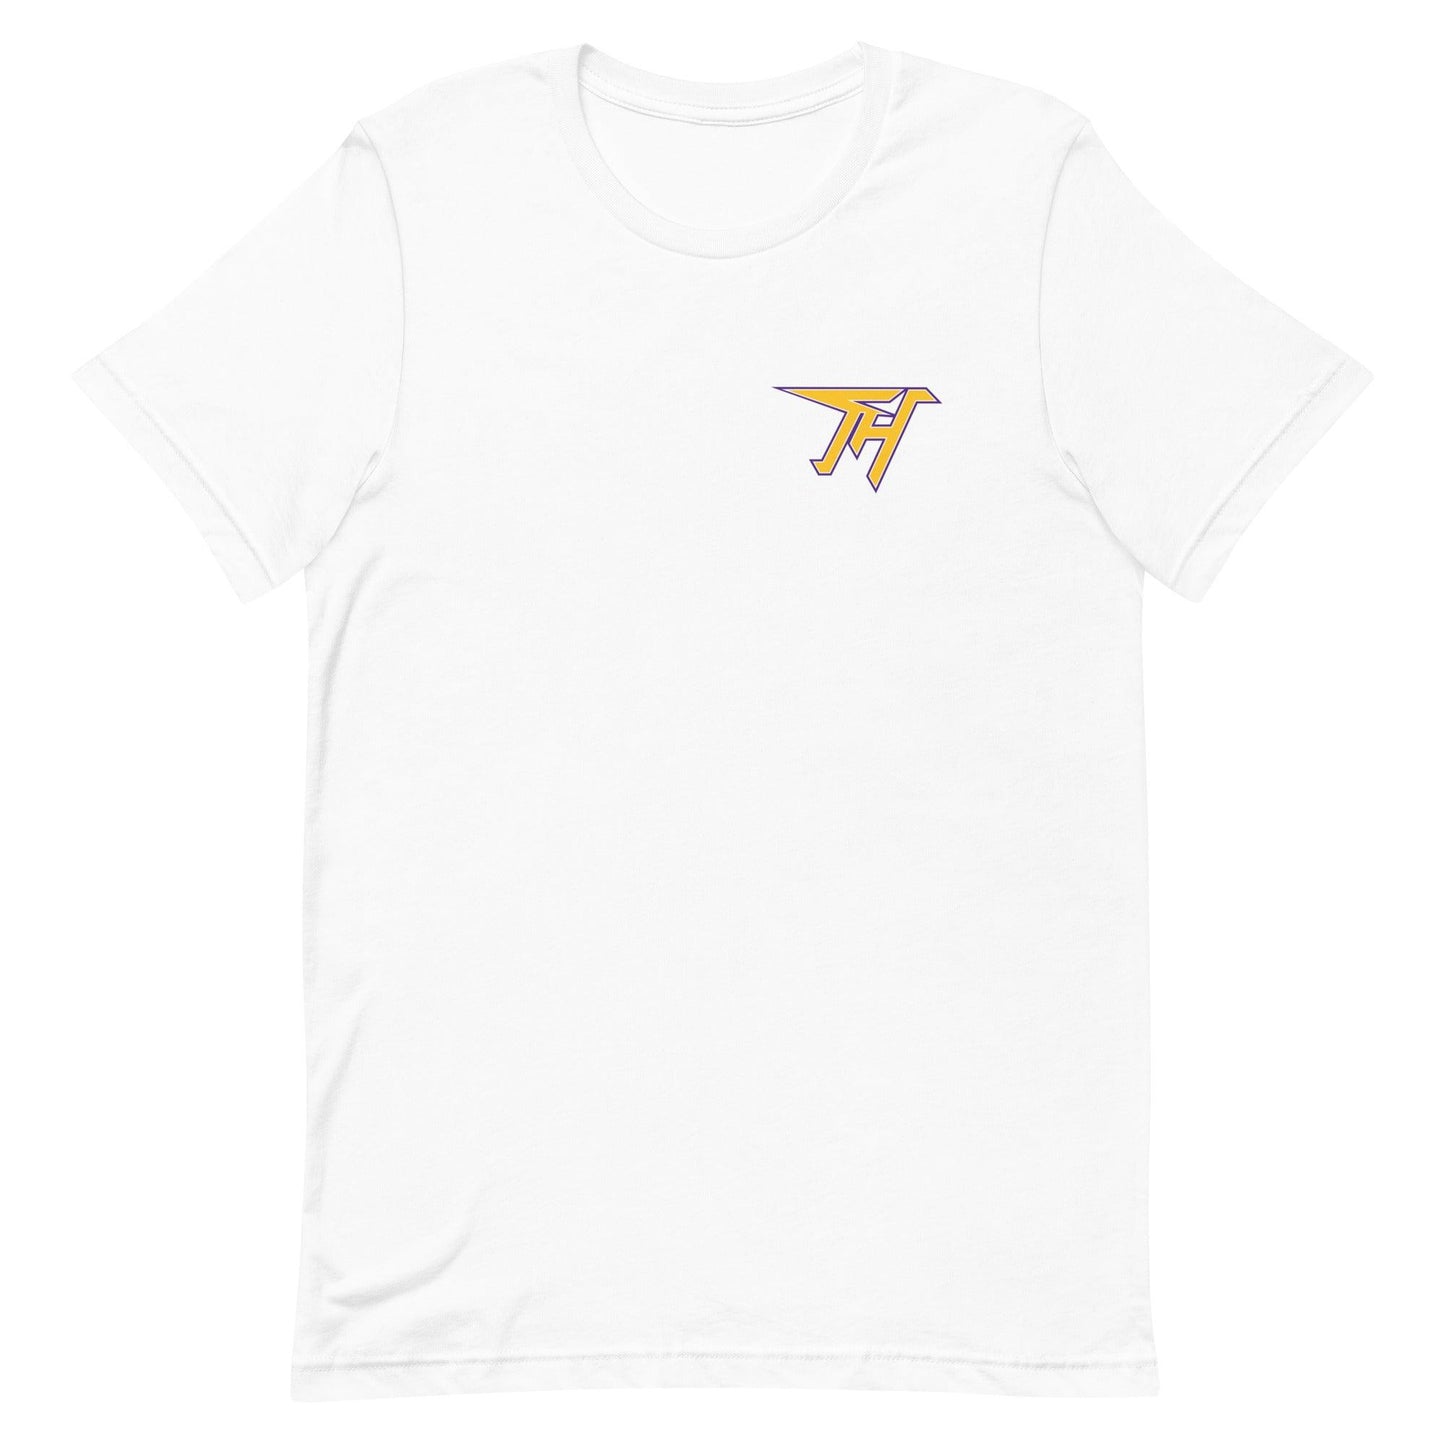 Trae Hannibal "Elite" t-shirt - Fan Arch